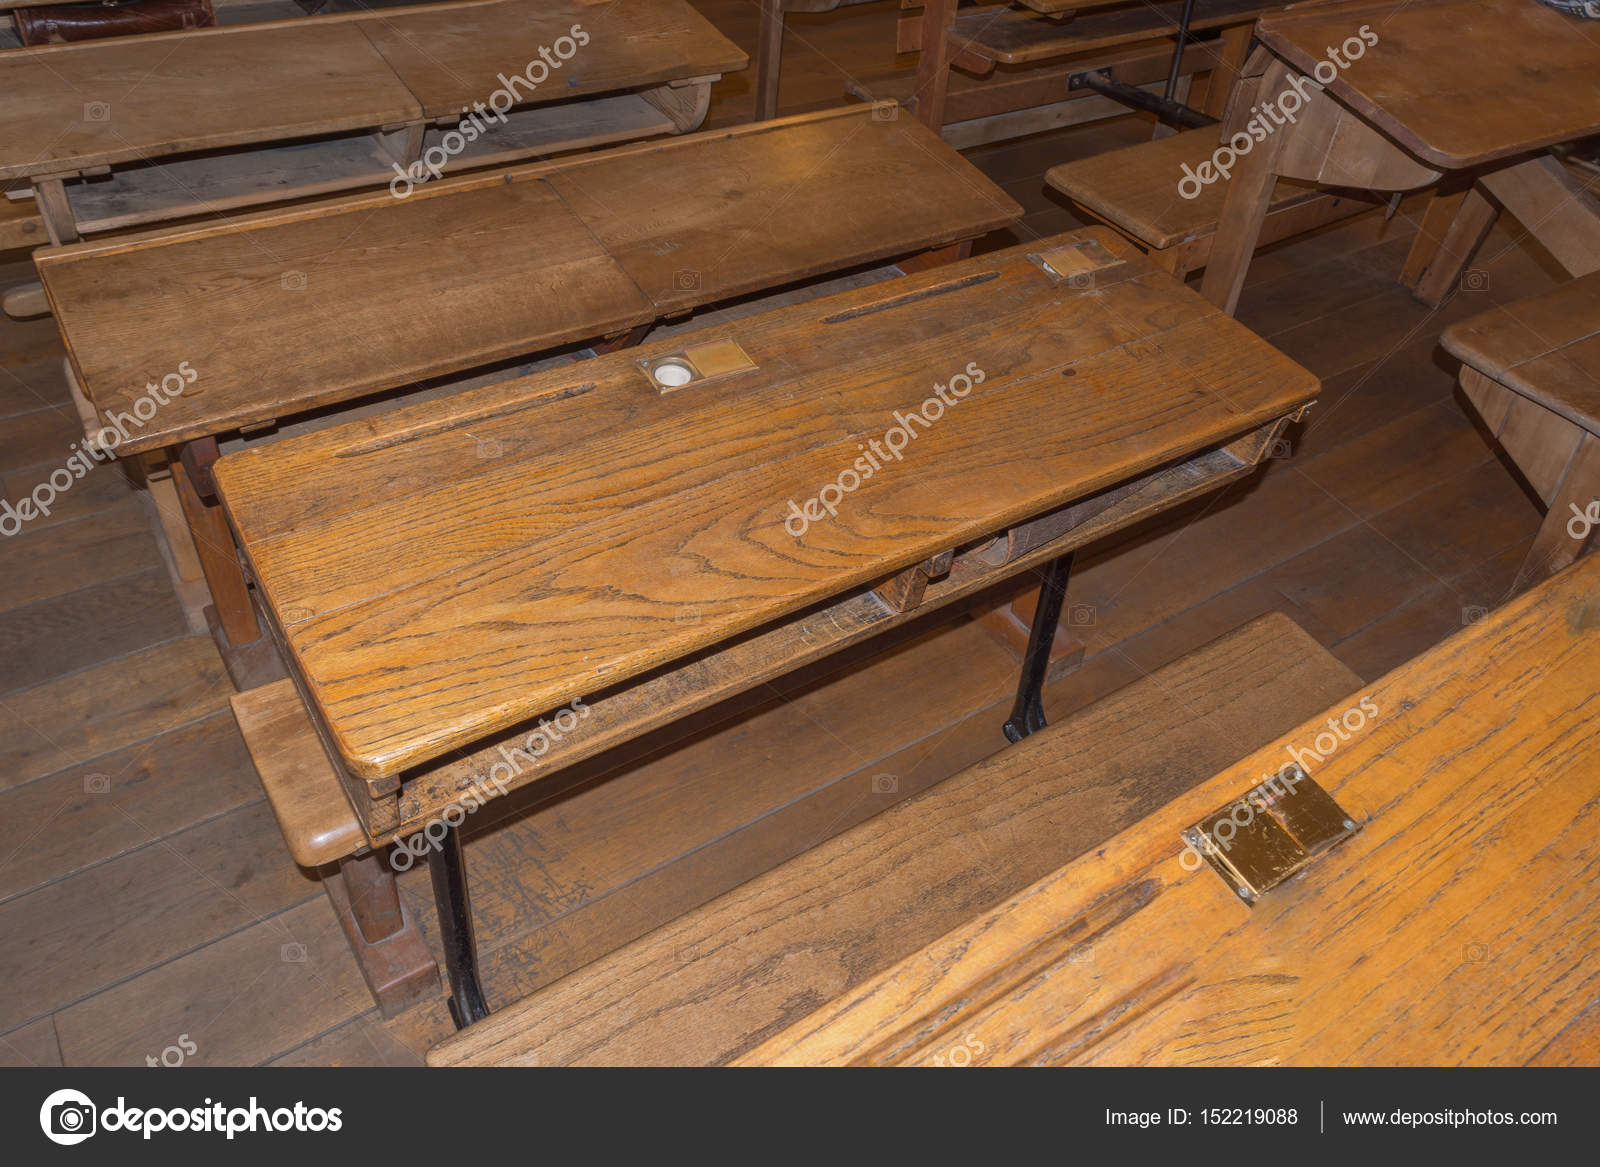 old classroom desks